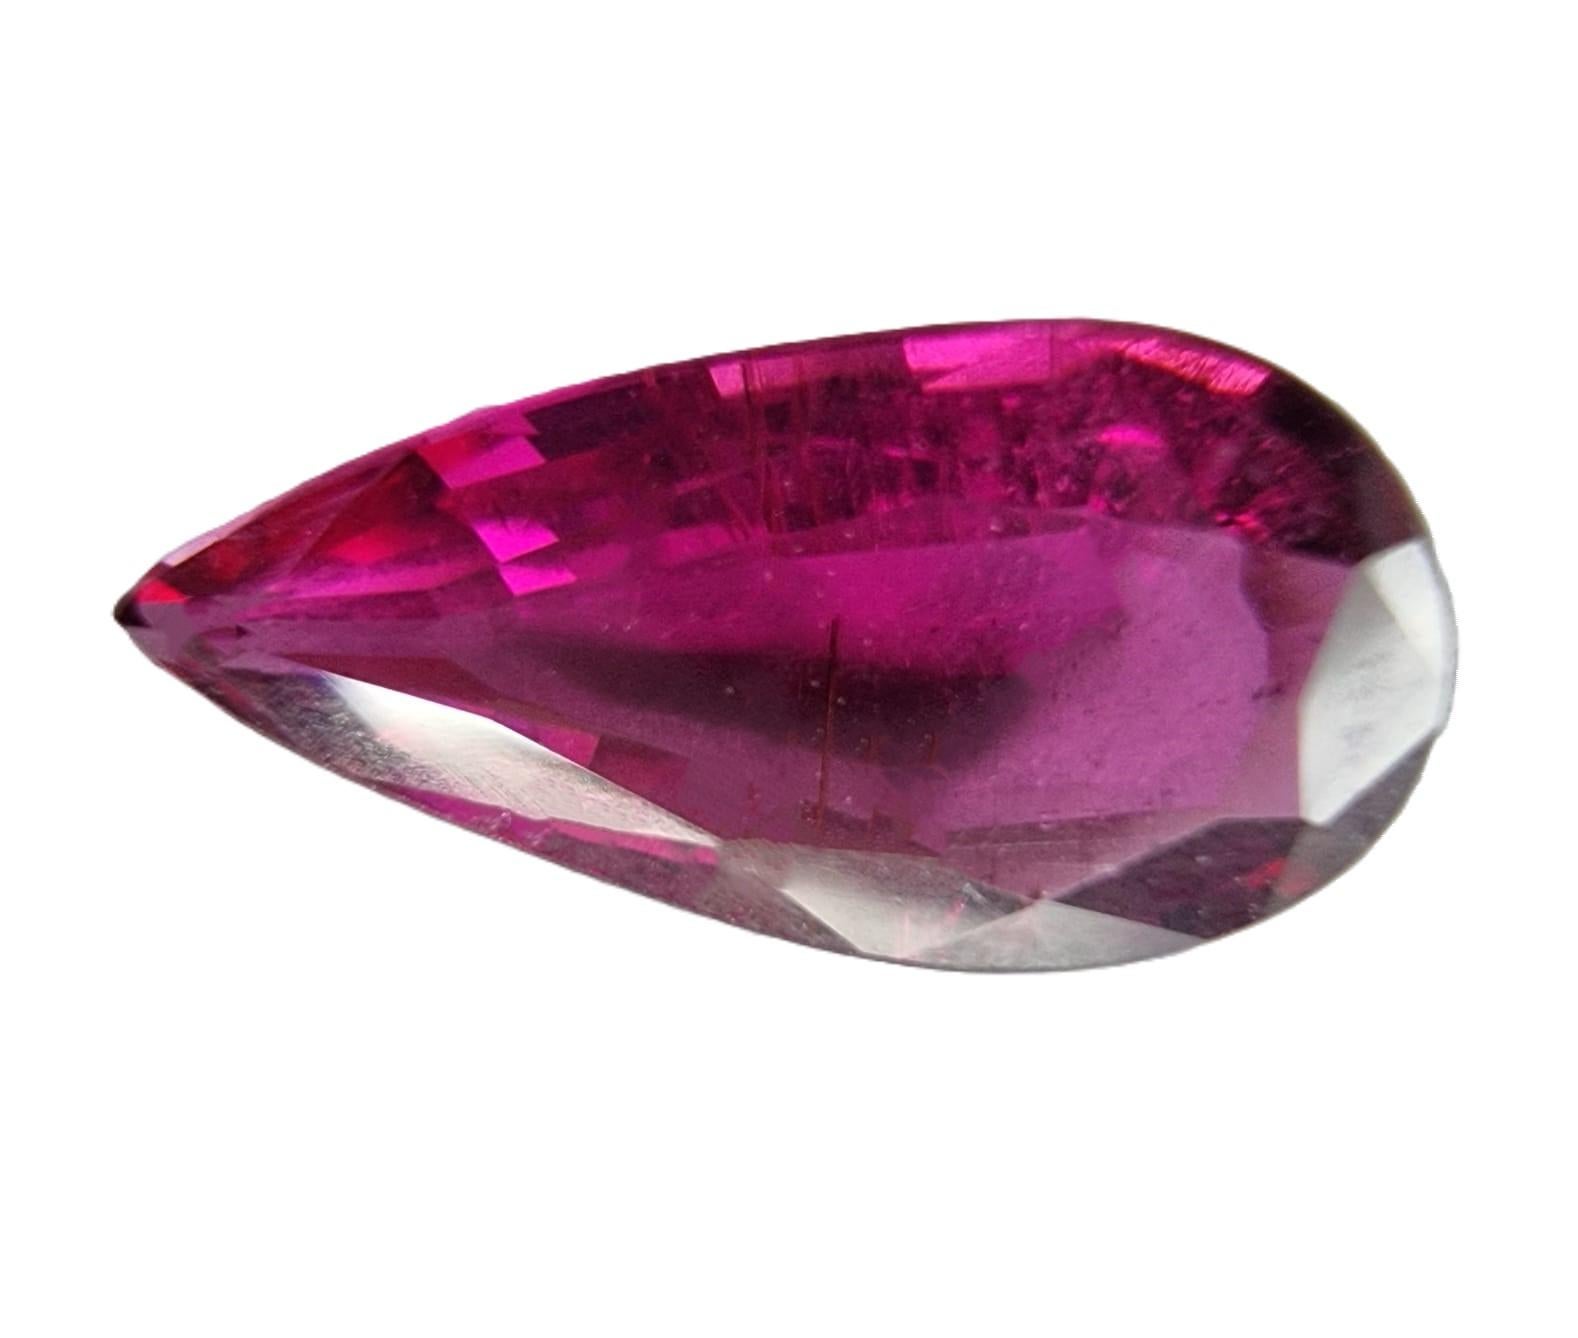 Modern 2.95ct Pear Cut Pinkish Red Rubellite Tourmaline Gemstone For Sale